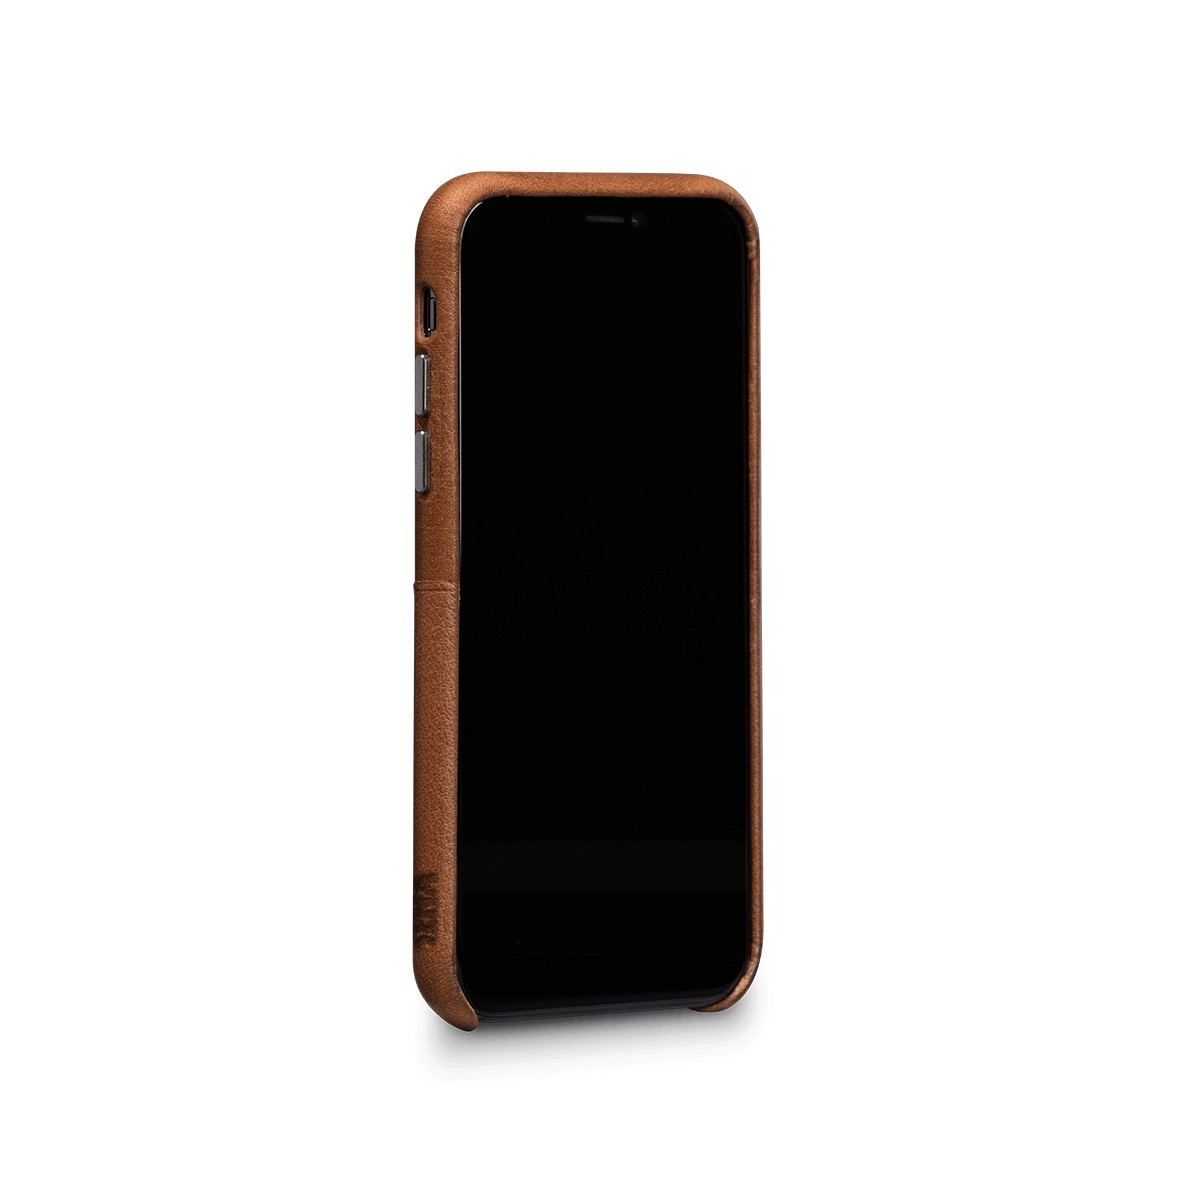 Coque iPhone Xs / iPhone X en cuir véritable porte-cartes marron - Sena Cases